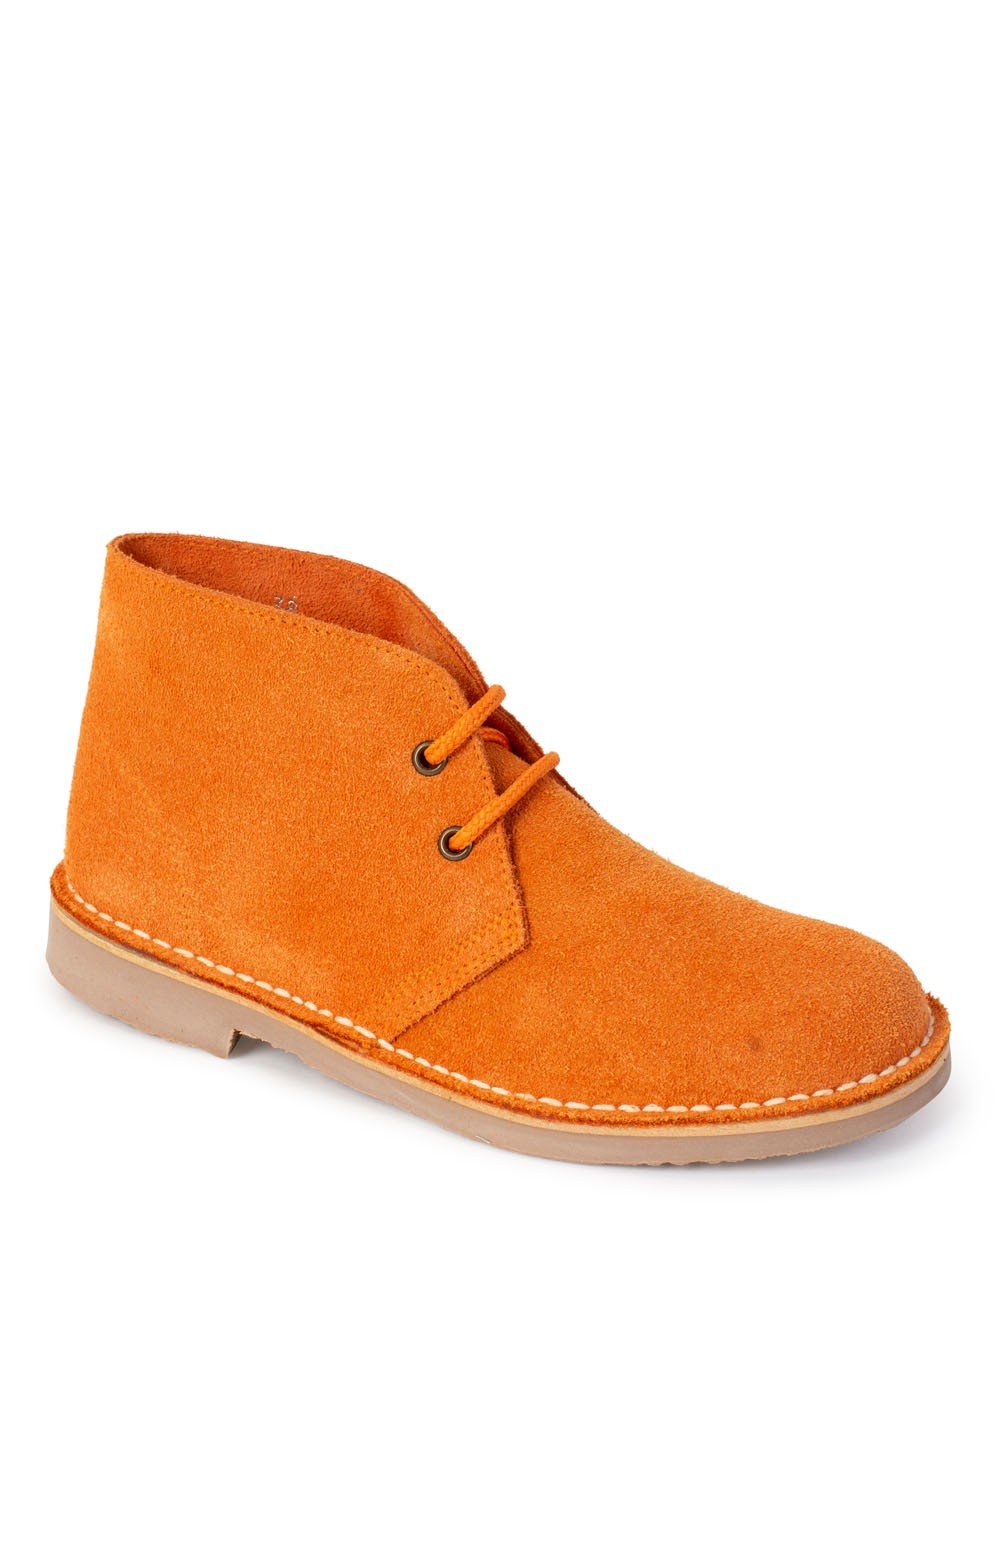 Buy > ladies orange boots > in stock